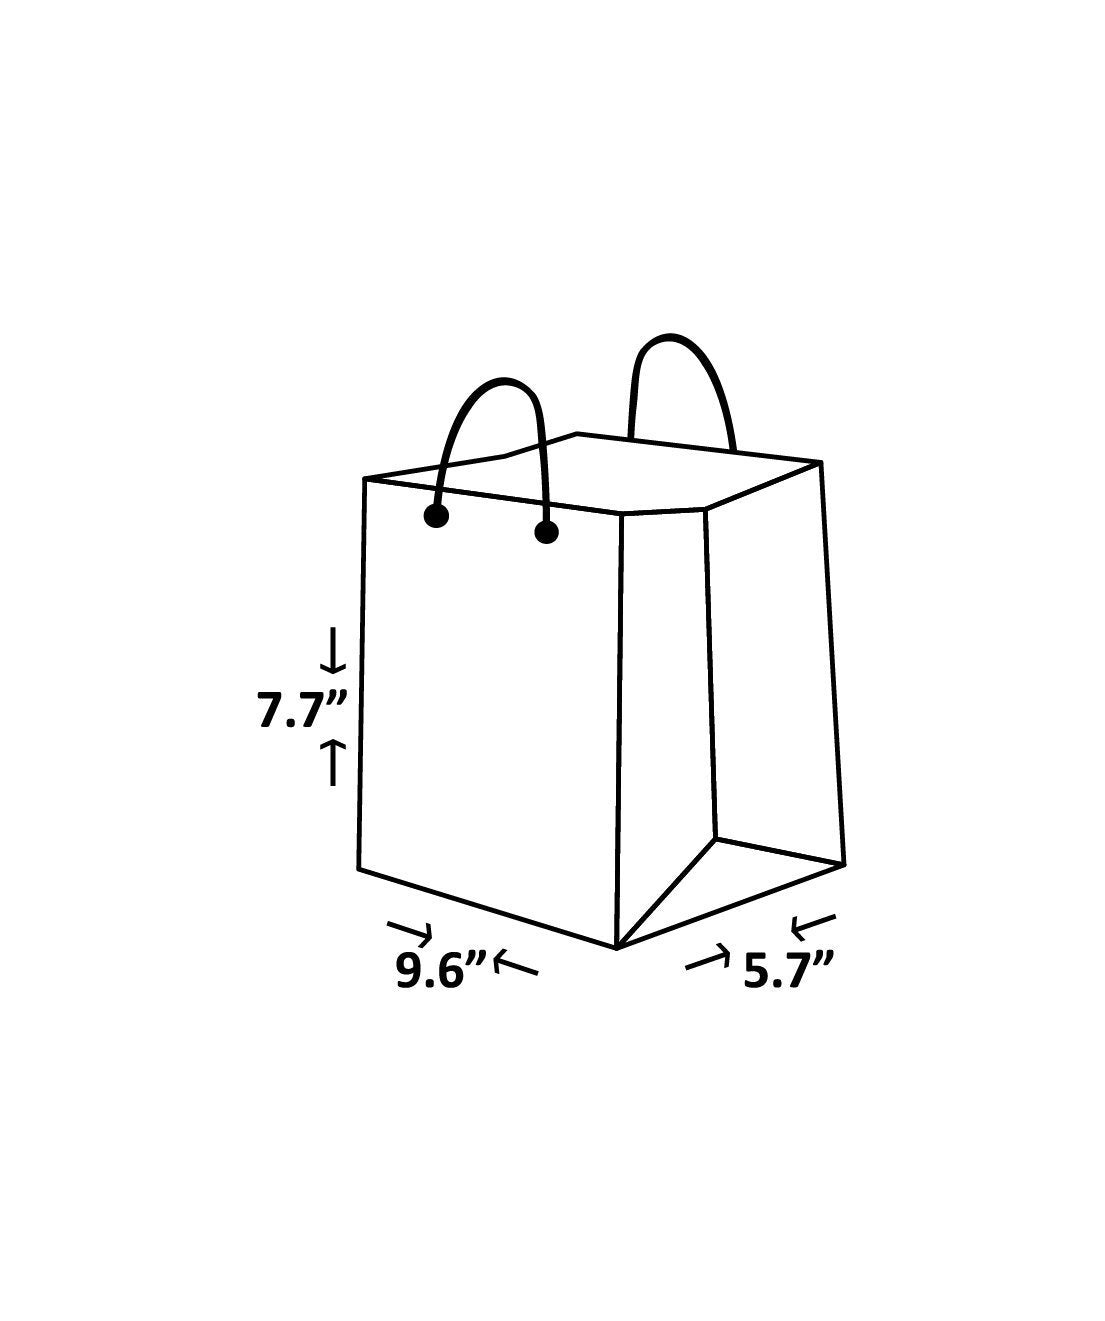 Geometric Pattren Paper Design Bag for Packing Paper Bags